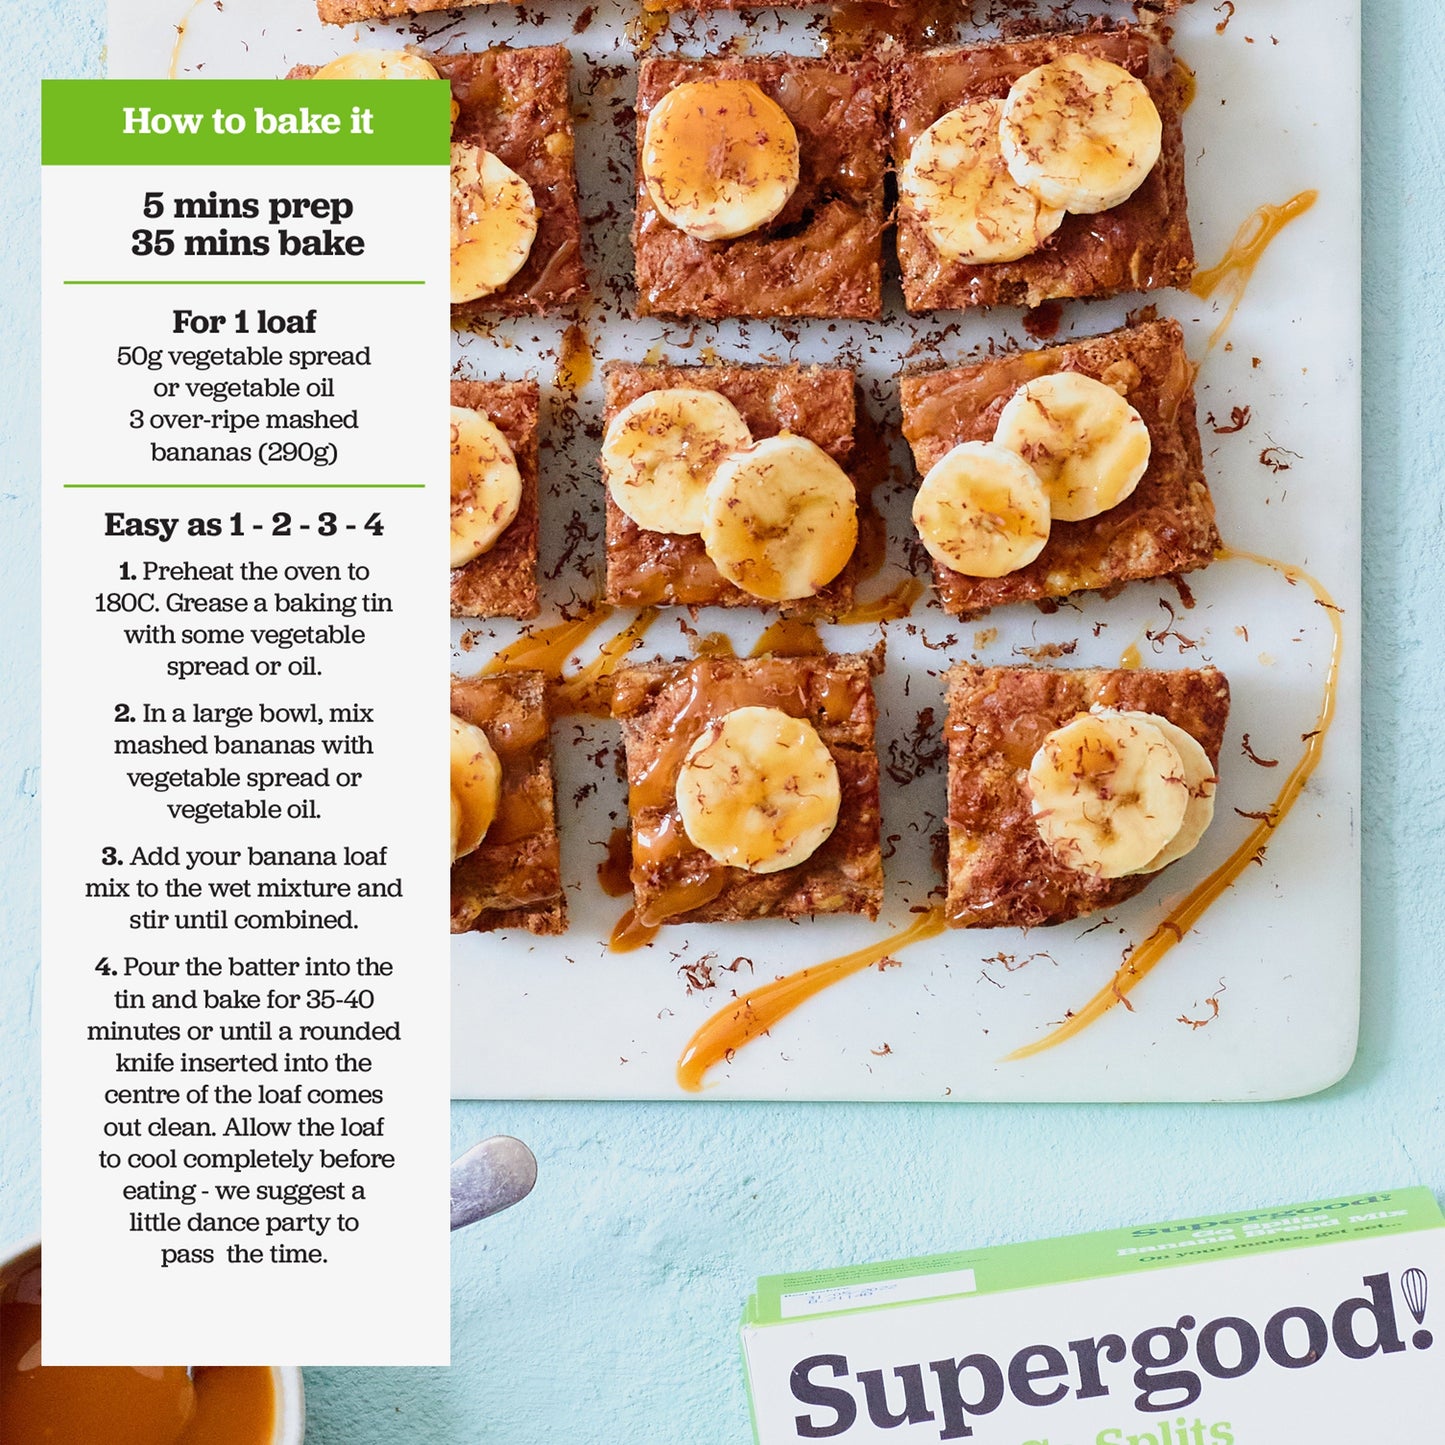 Go Splits Banana Bread Mix - Bake Your Own Delicious Banana Loaf